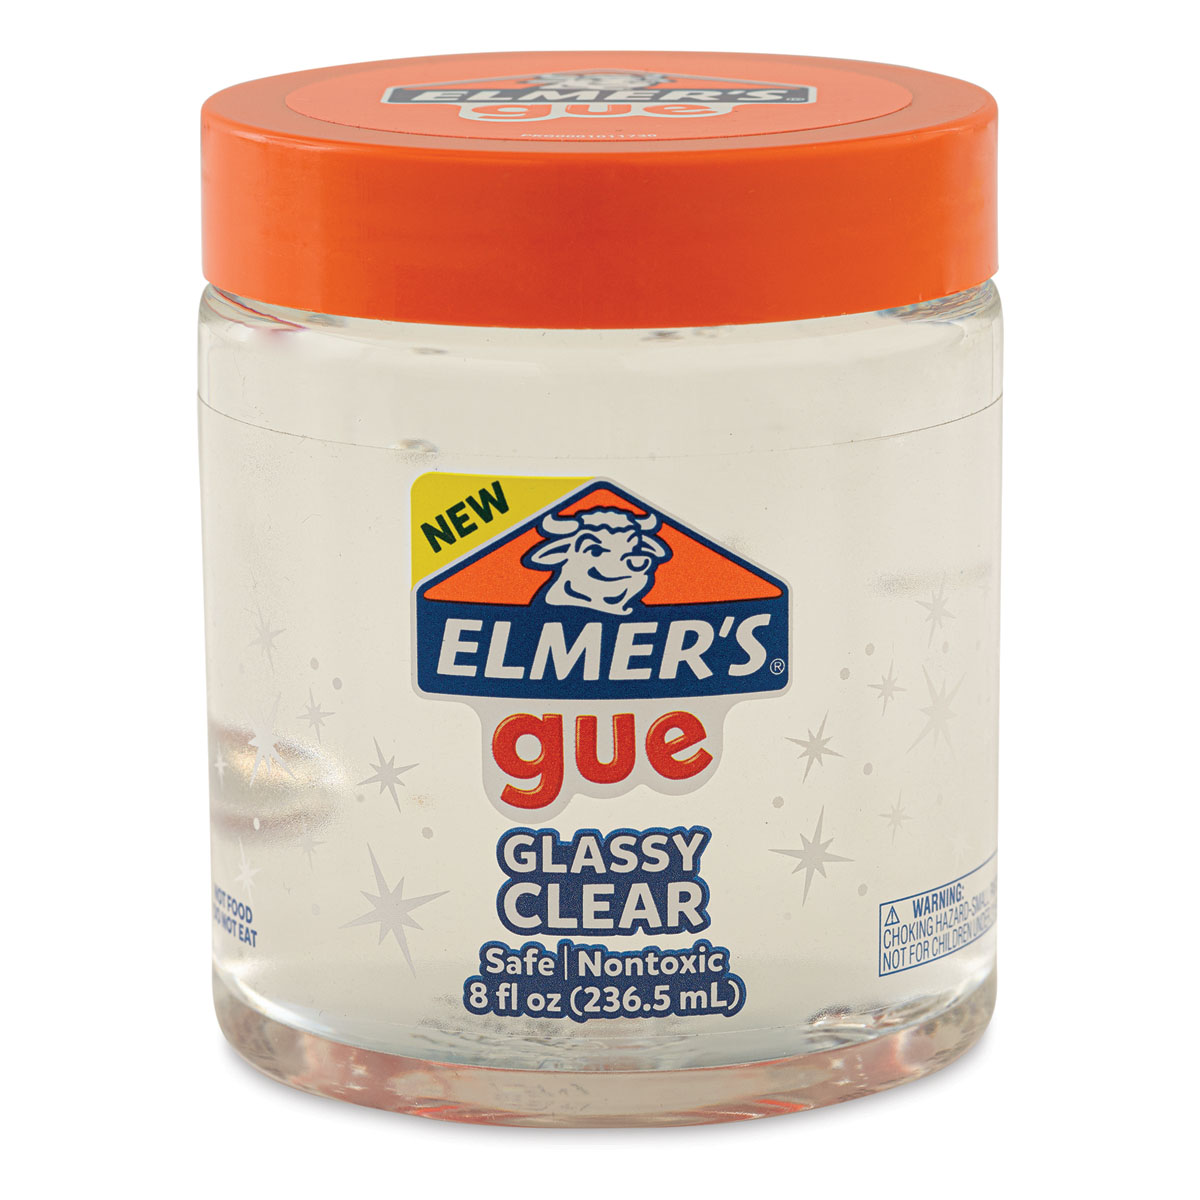 Elmer's Gue Glassy Clear Premade Slime